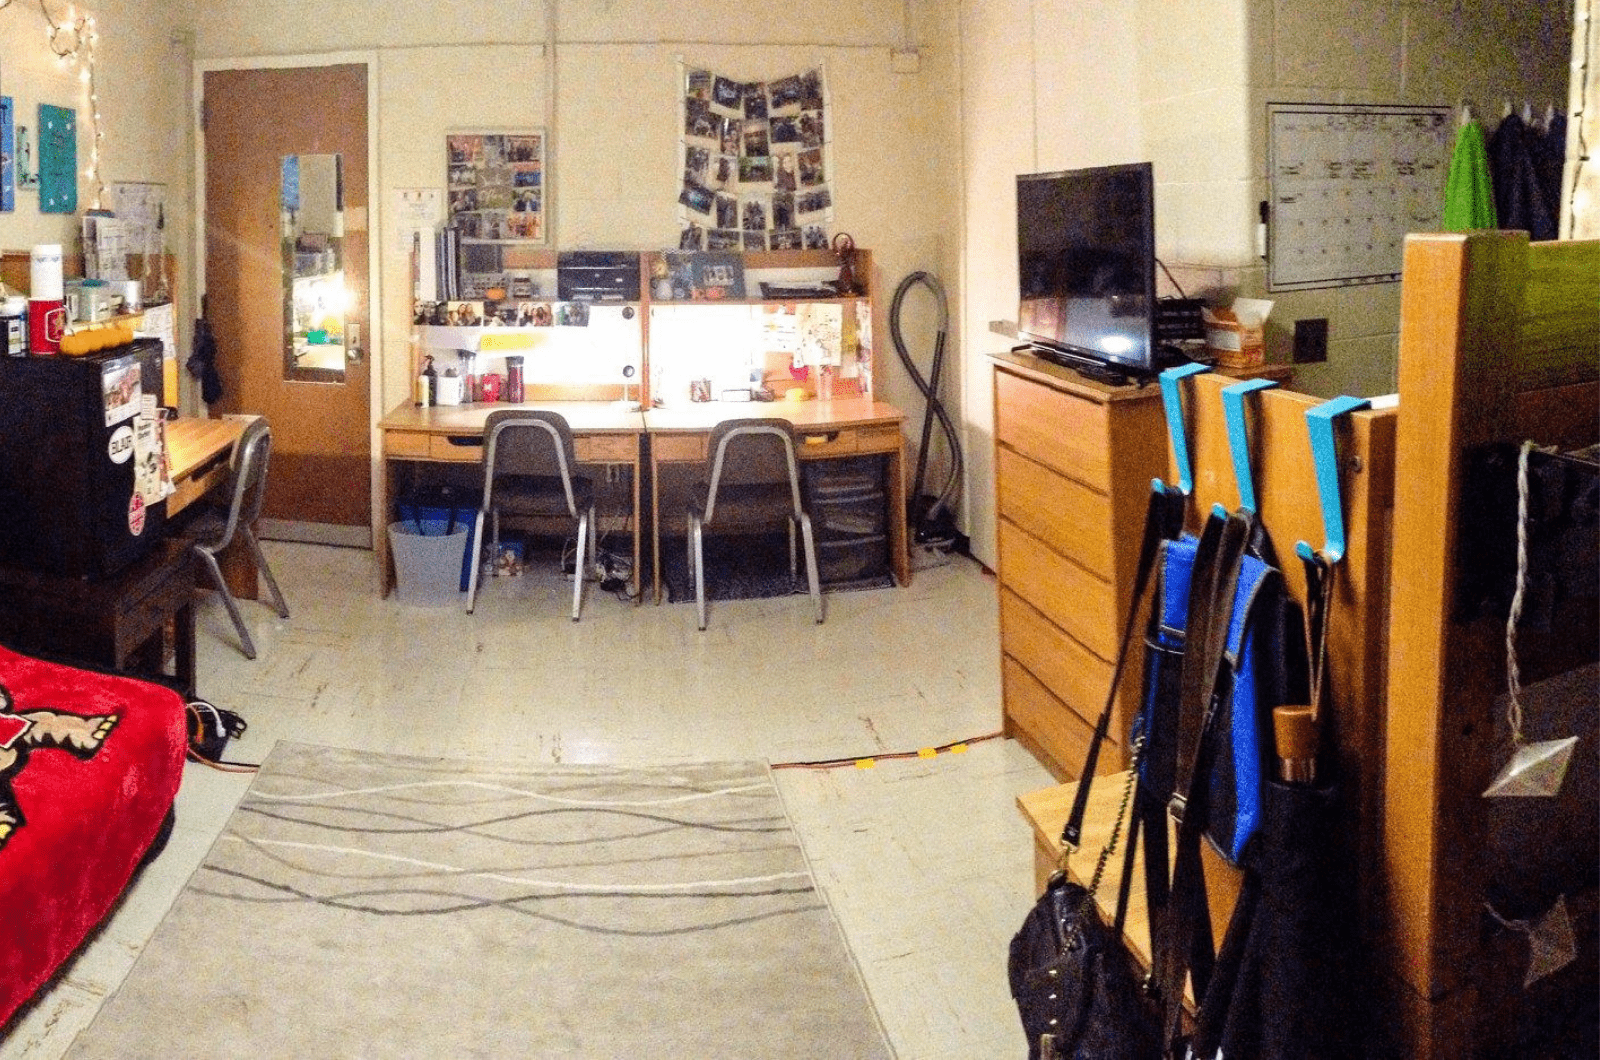 quad room with three desks visible